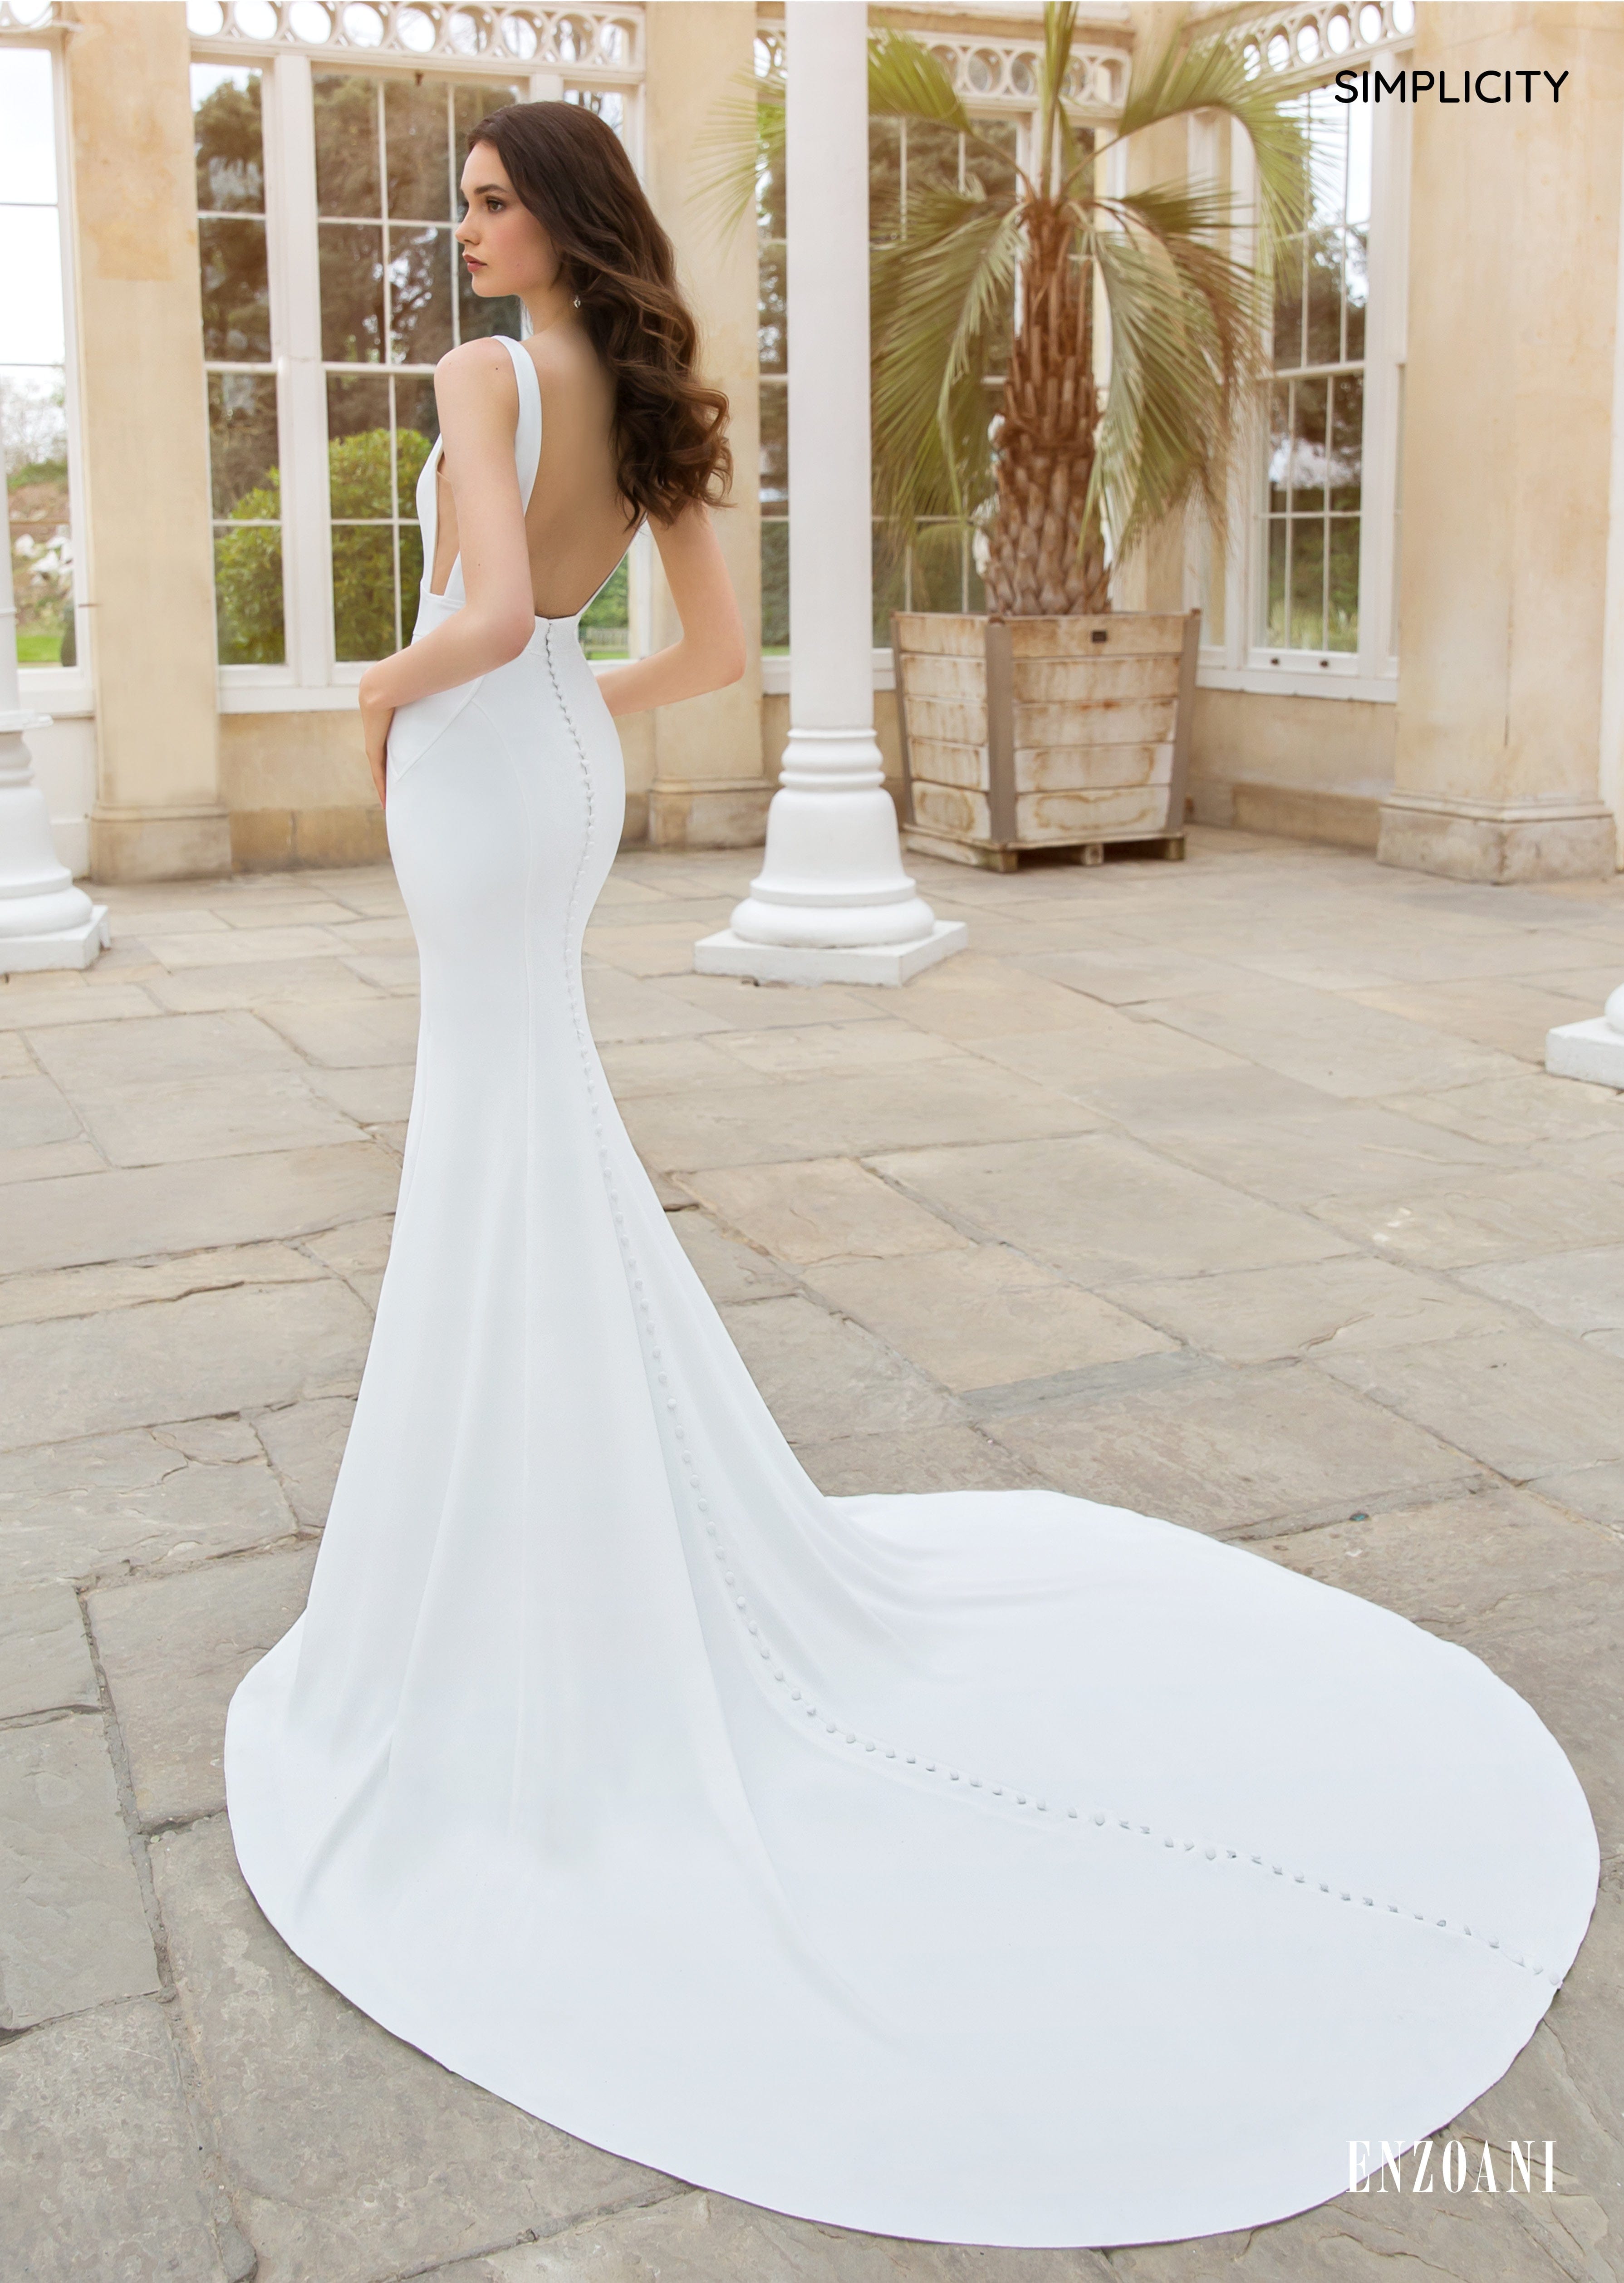 Enzoani Wedding Dress 8 / Ivory Enzoani: Simplicity (Clearance)